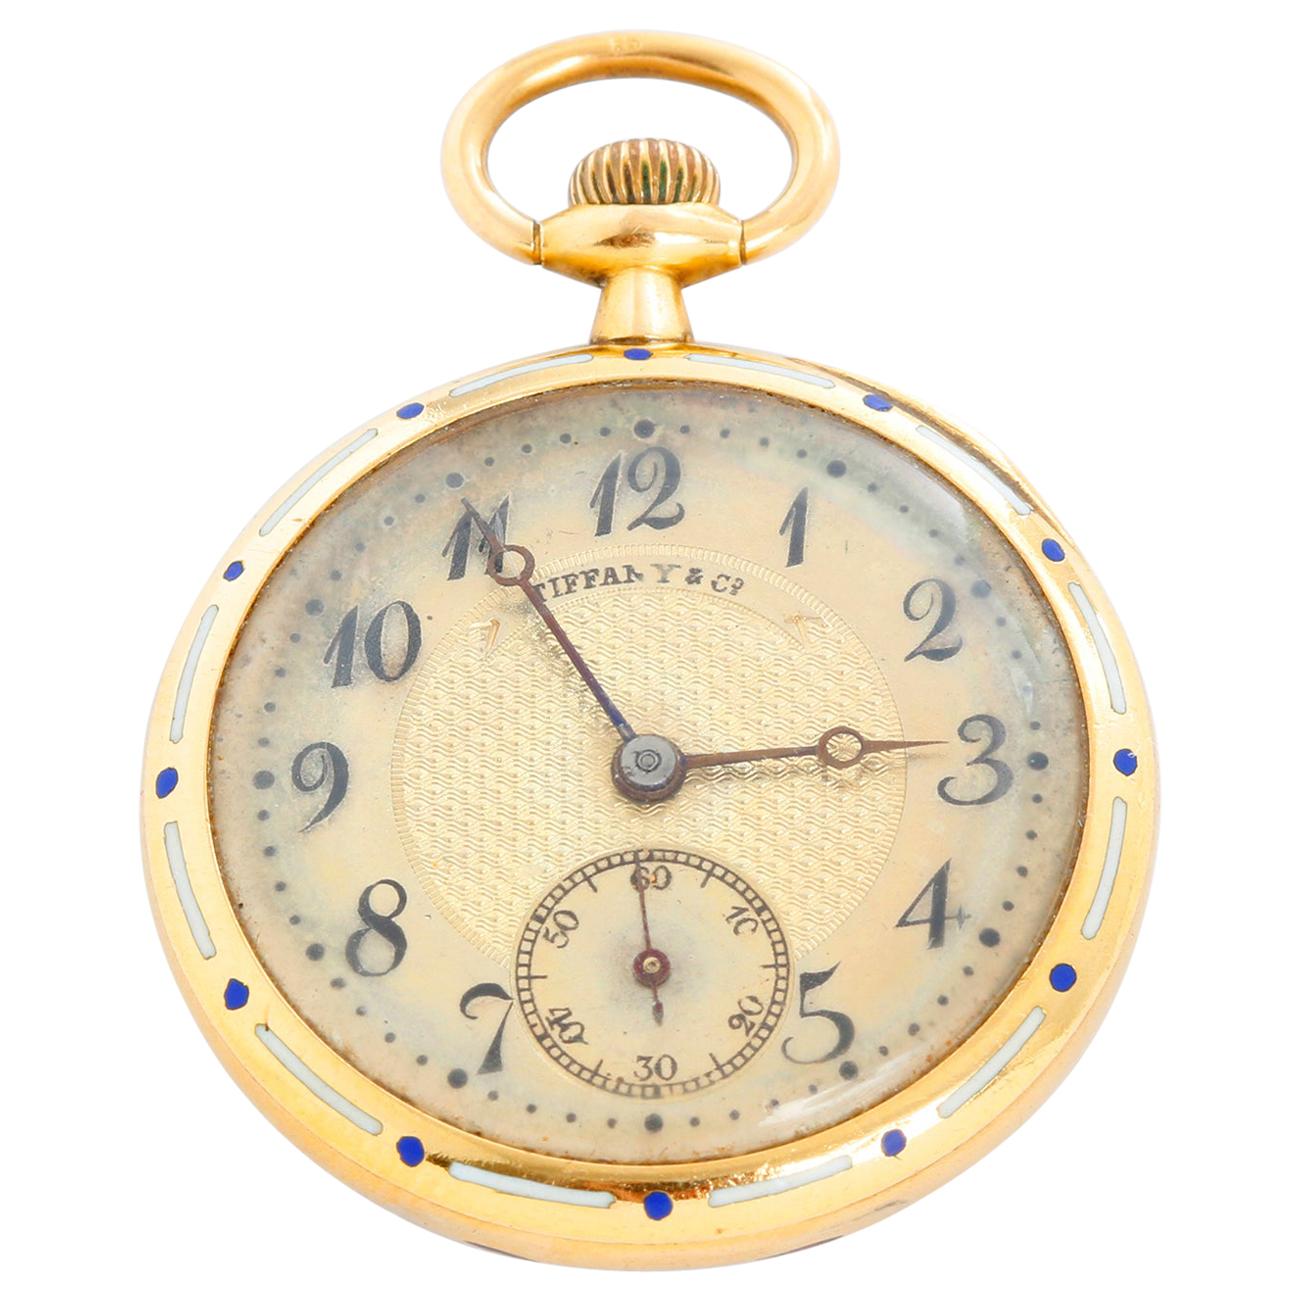 Tiffany & Co. Enameled 18 Karat Yellow Gold Pocket Watch